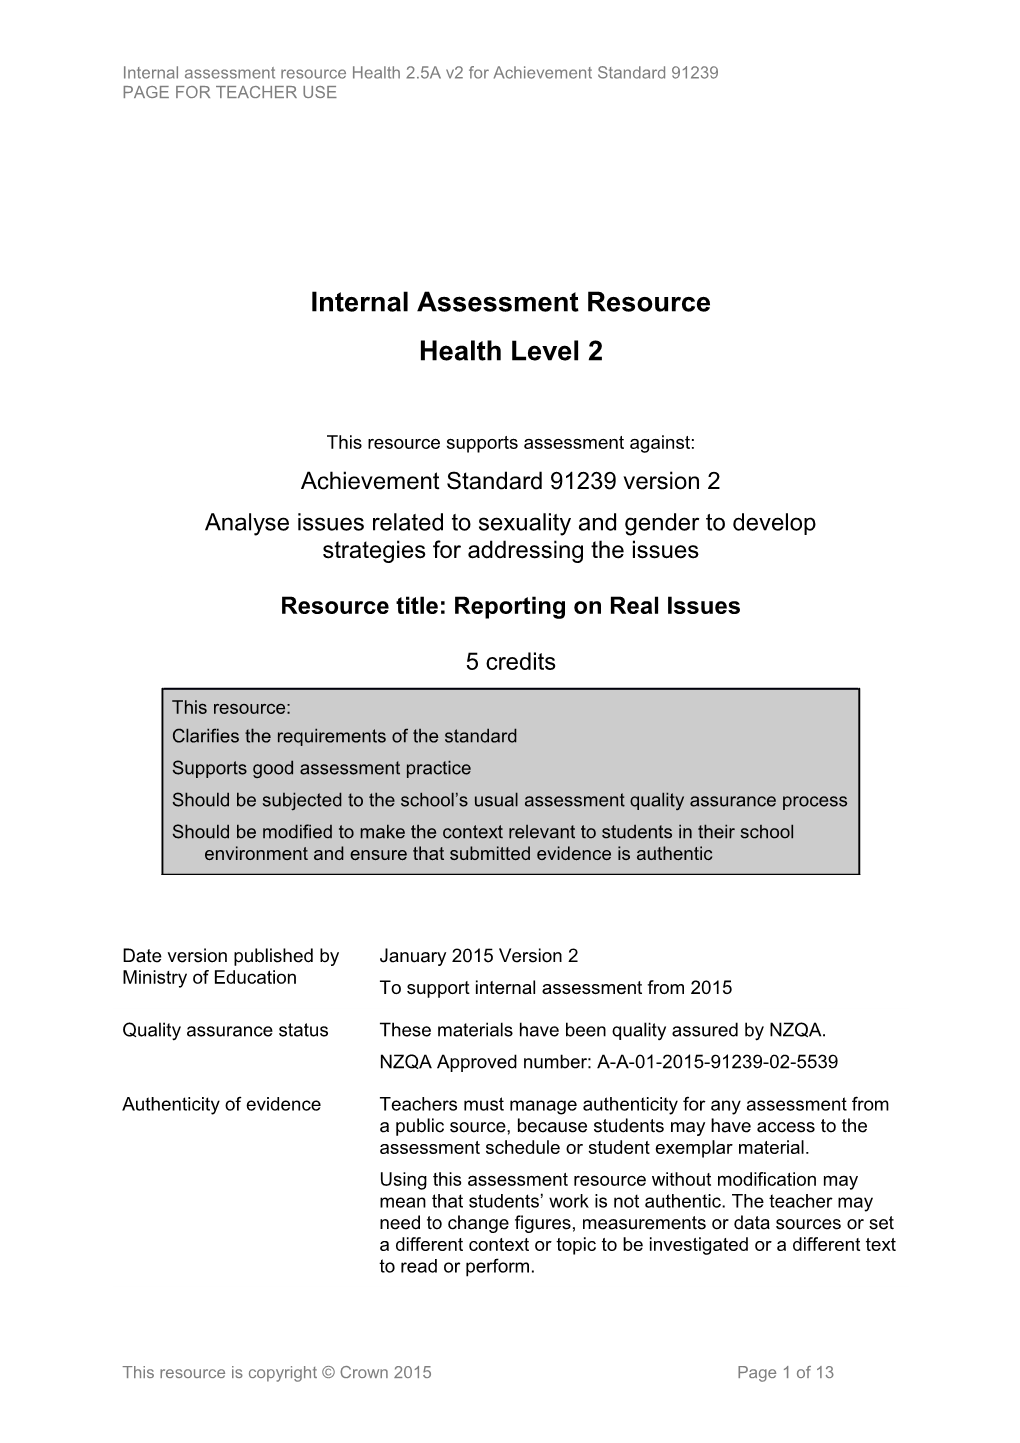 Level 2 Health Internal Assessment Resource